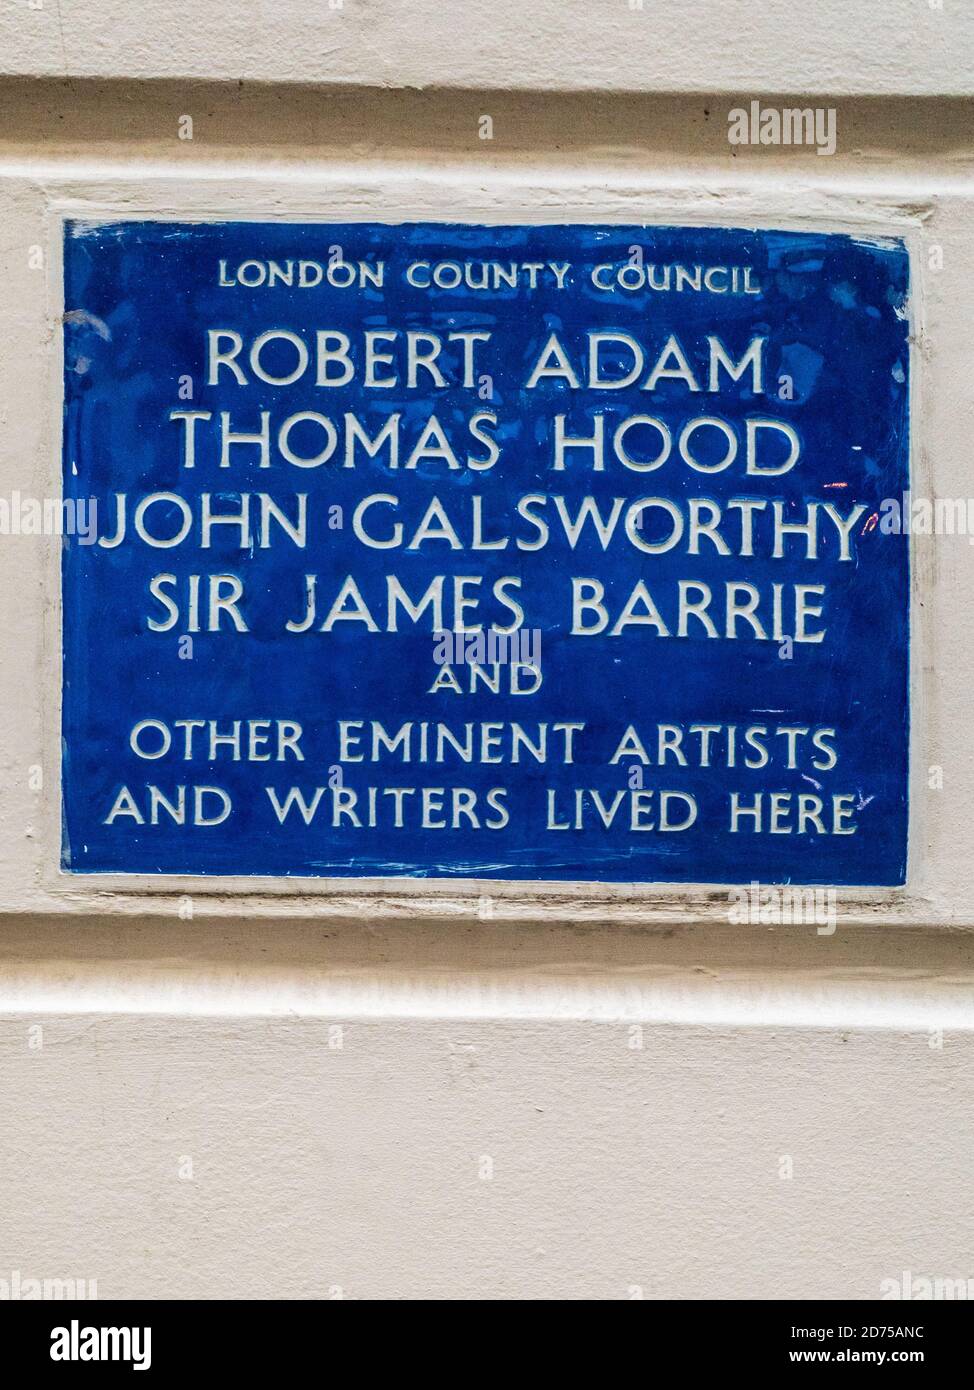 London County Council Blue Plaque for Robert Adam, Thomas Hood, John Galsworthy & Sir James Barrie, lived at 1-3 Robert Street, Charing Cross, London. Stock Photo